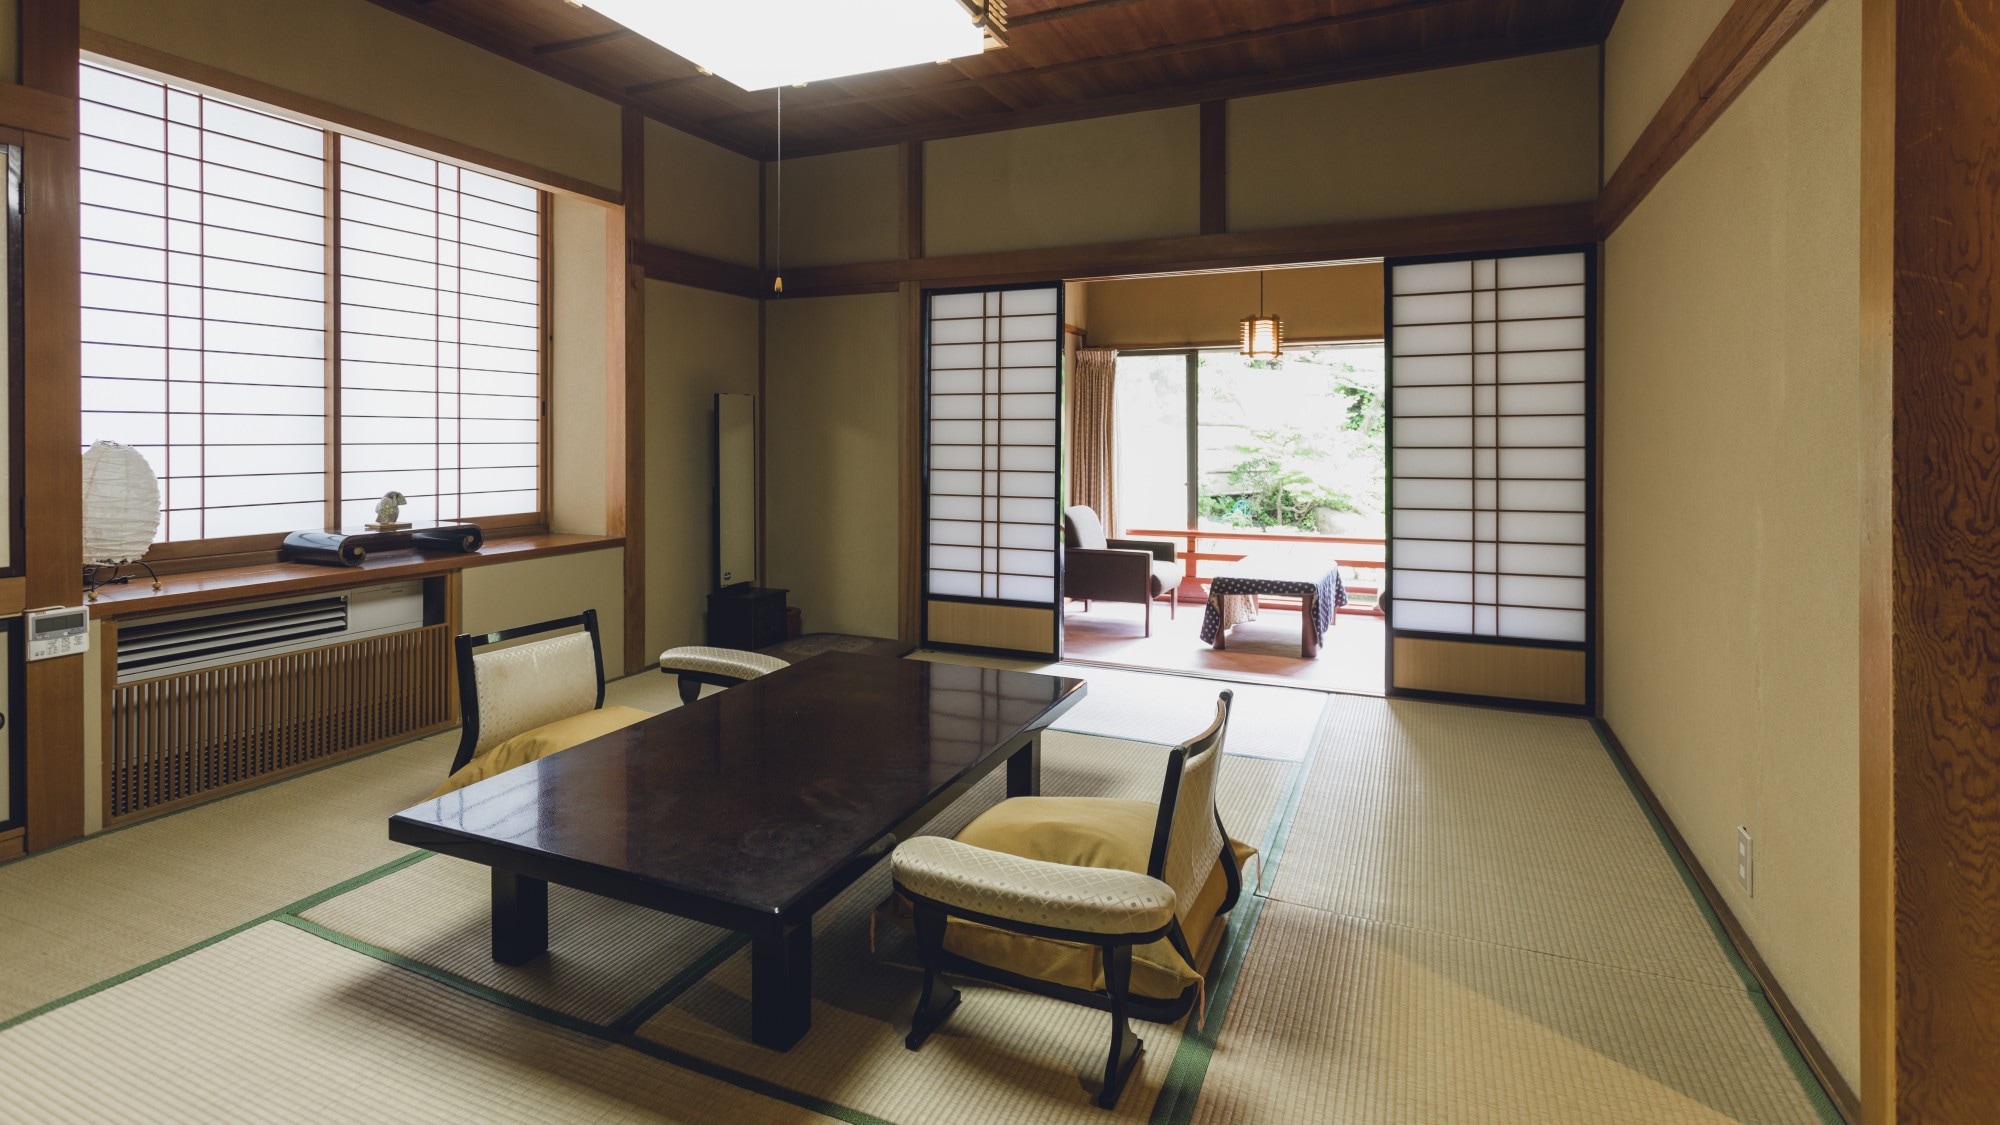 ◆ Japanese garden side ◆ Japanese-style room (10 tatami mats + 2 tatami mats + wide rim)